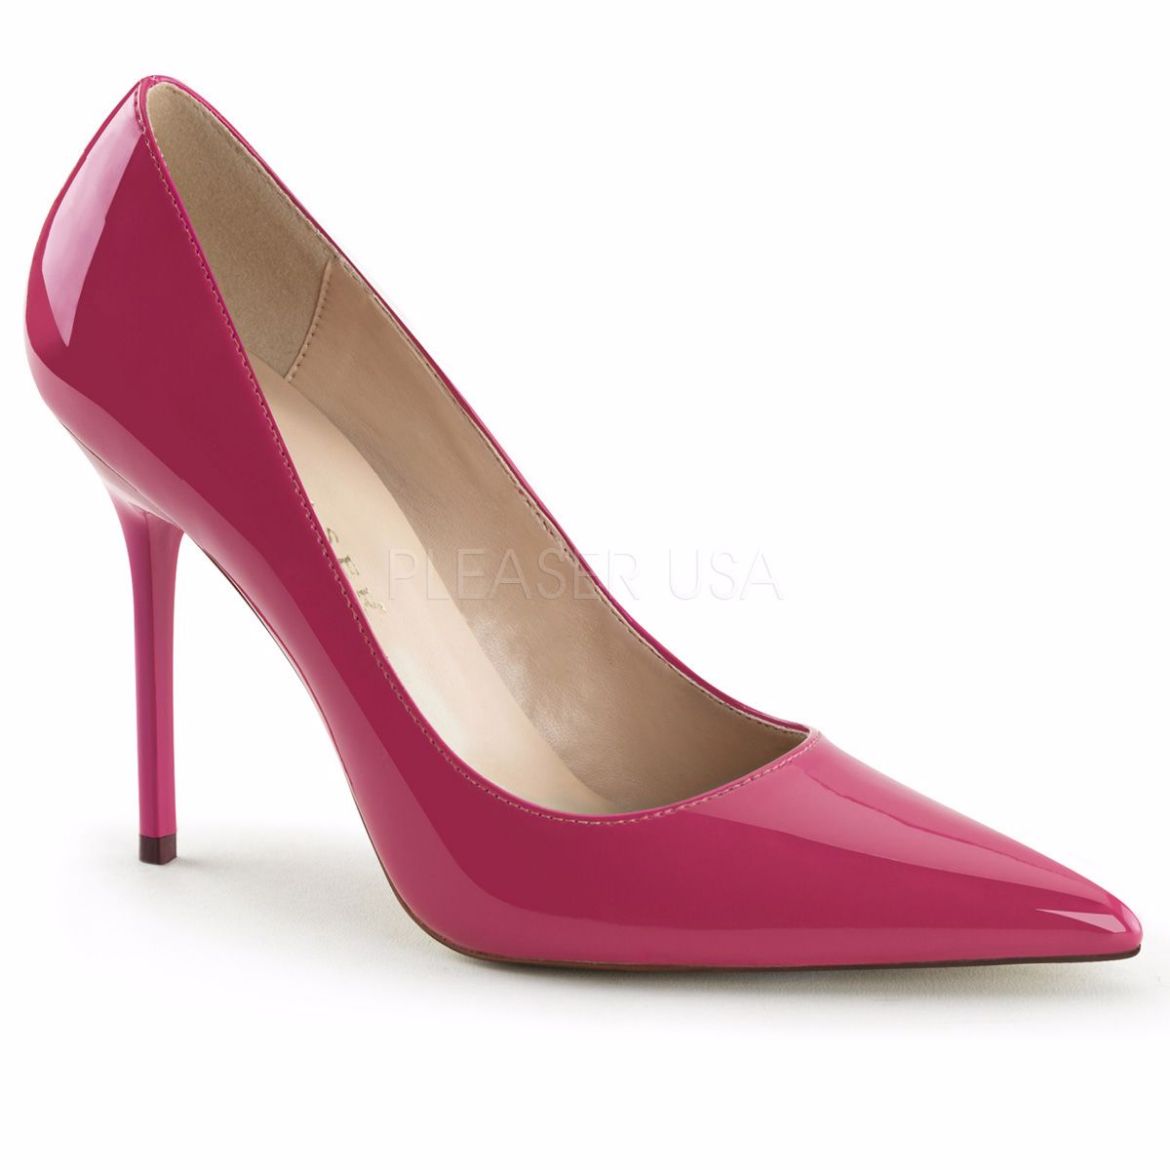 Product image of Pleaser Classique-20 Hot Pink Patent, 4 inch (10.2 cm) Heel Court Pump Shoes